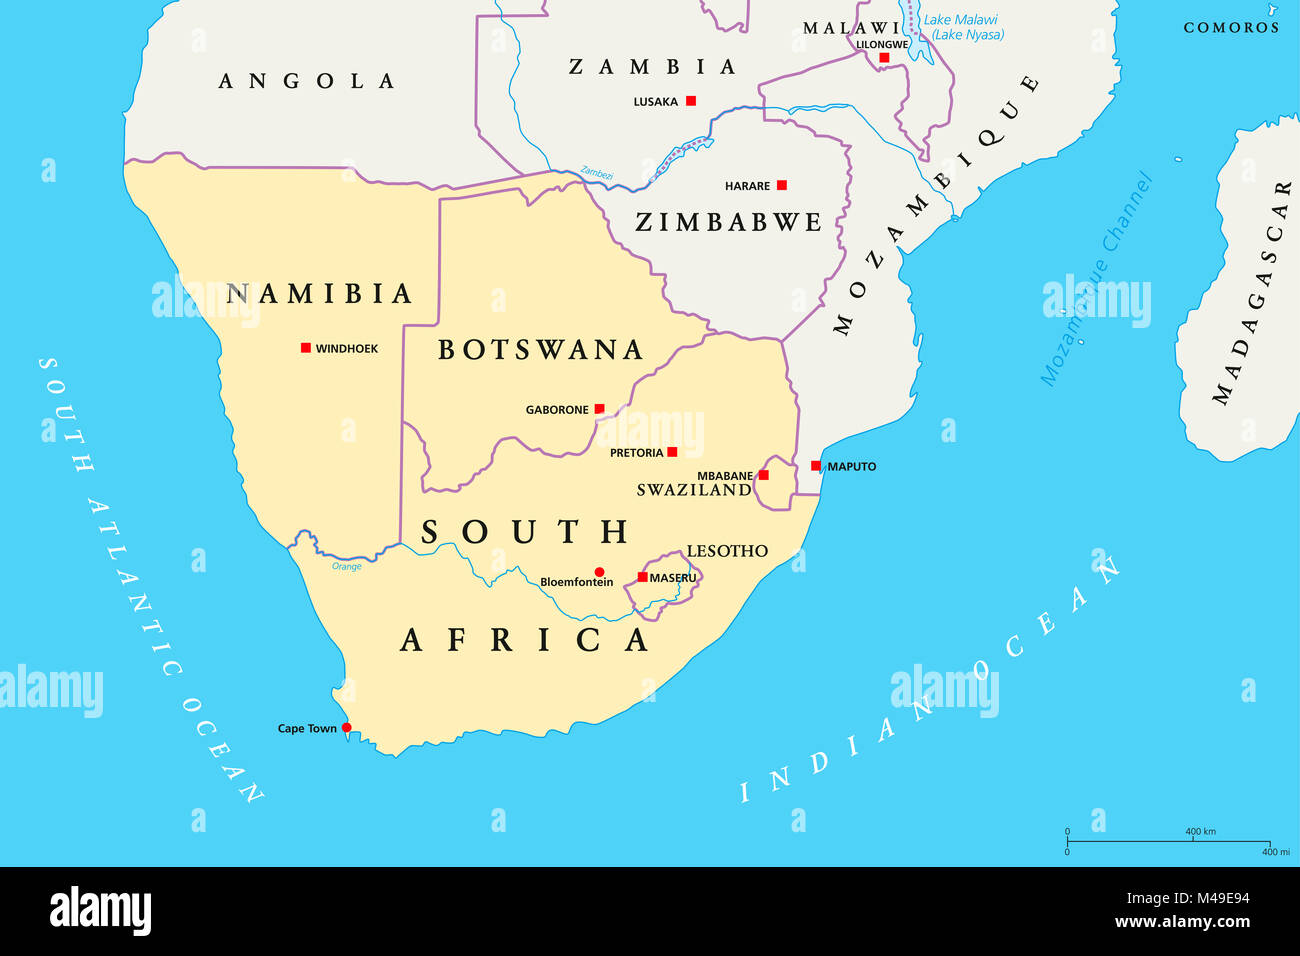 Region des südlichen Afrika politische Karte. Die südlichste Region des afrikanischen Kontinents. Südafrika, Namibia, Botswana, Swaziland und Lesotho. Stockfoto